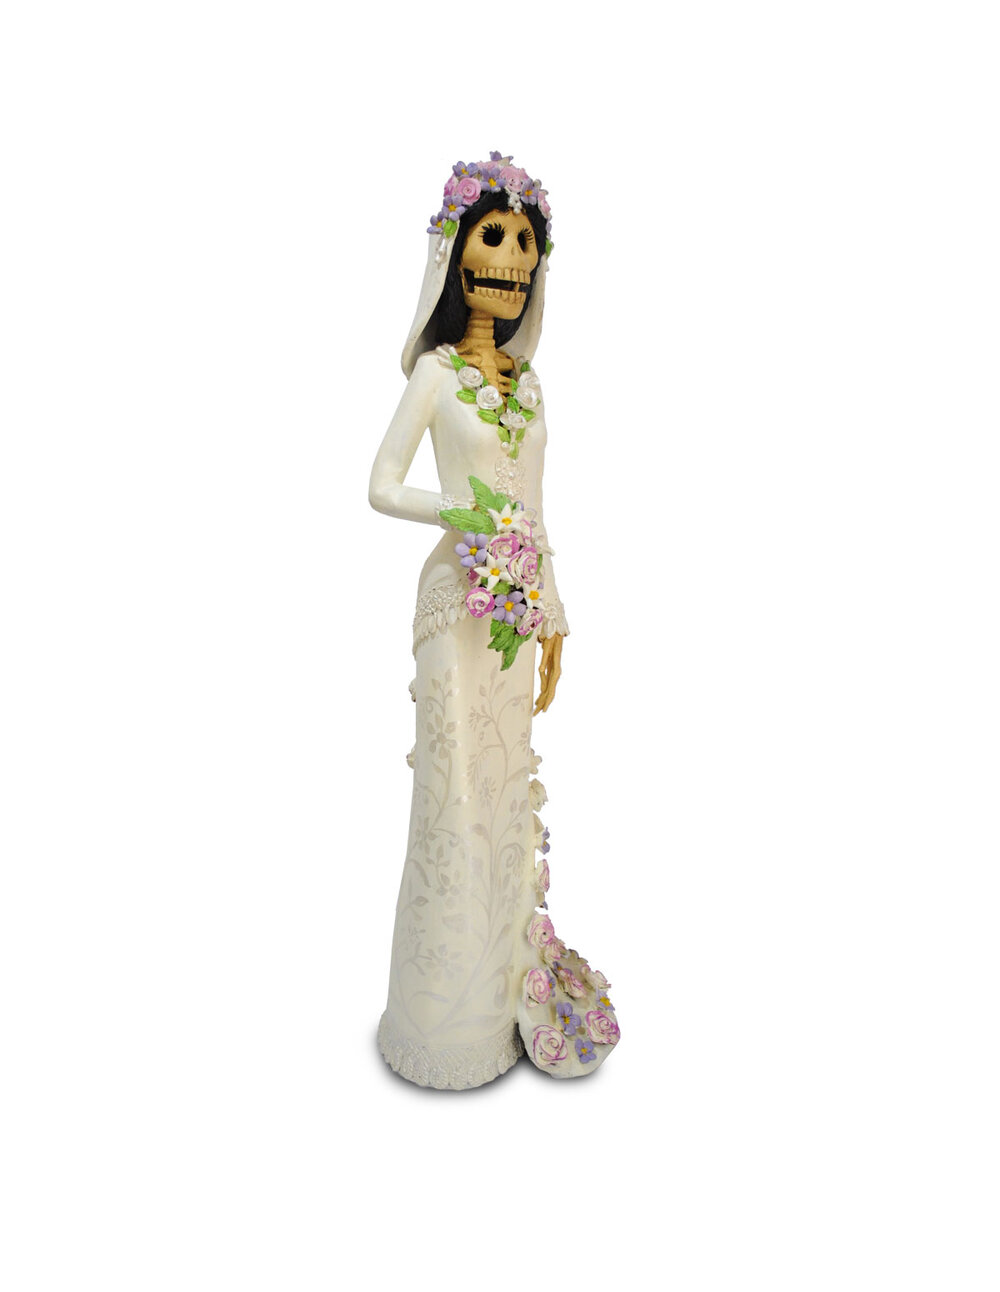 Catrina de barro vestida de novia — Tikal Arte Mexicano